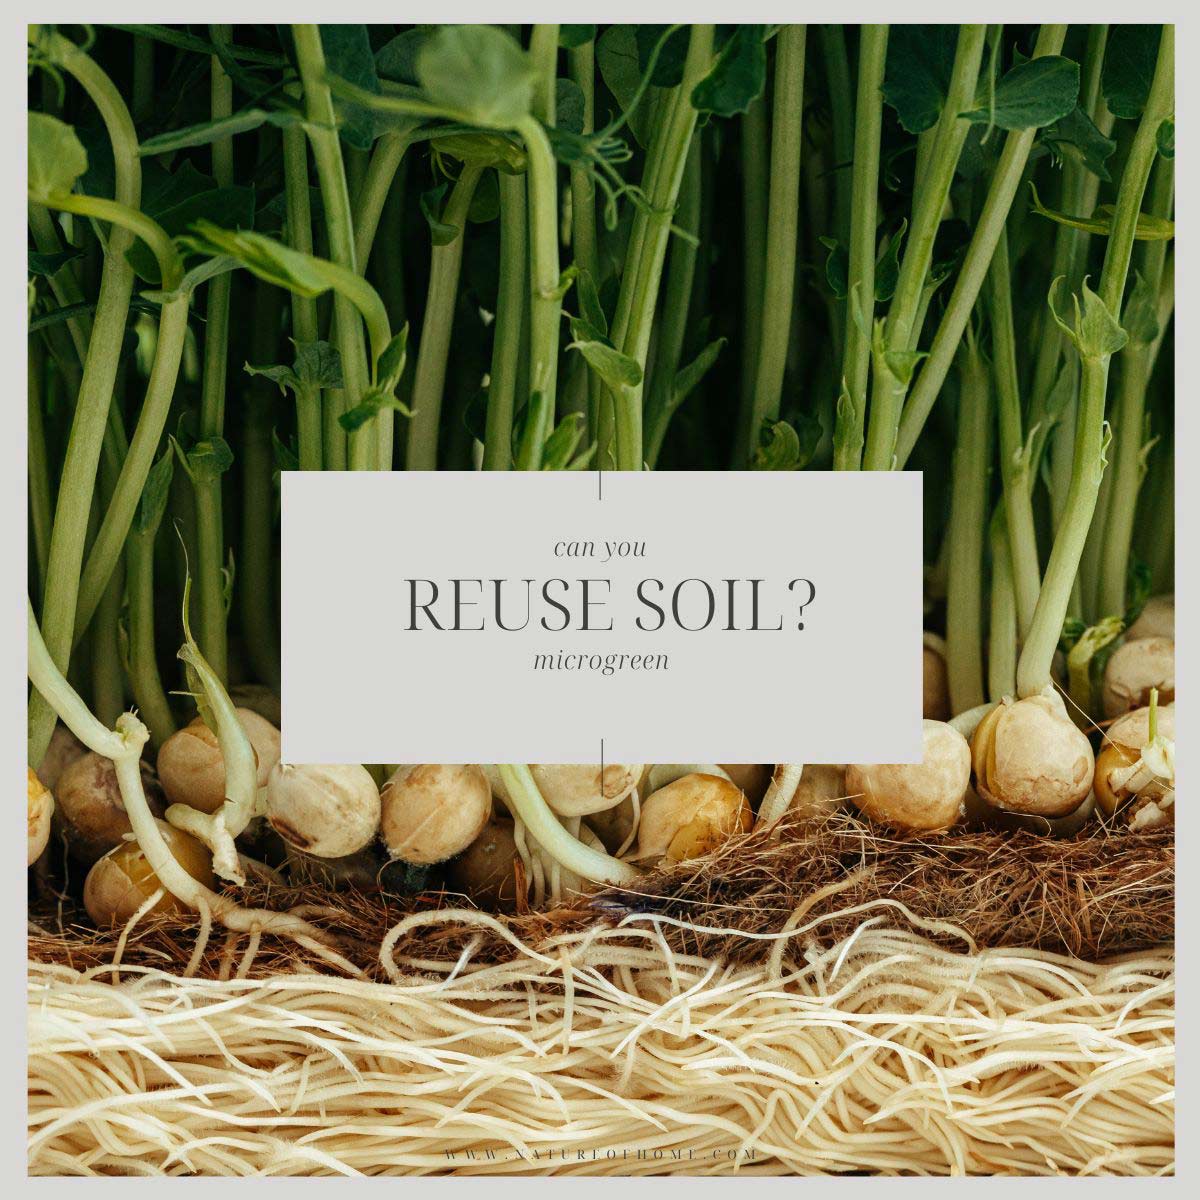 reuse microgreen soil